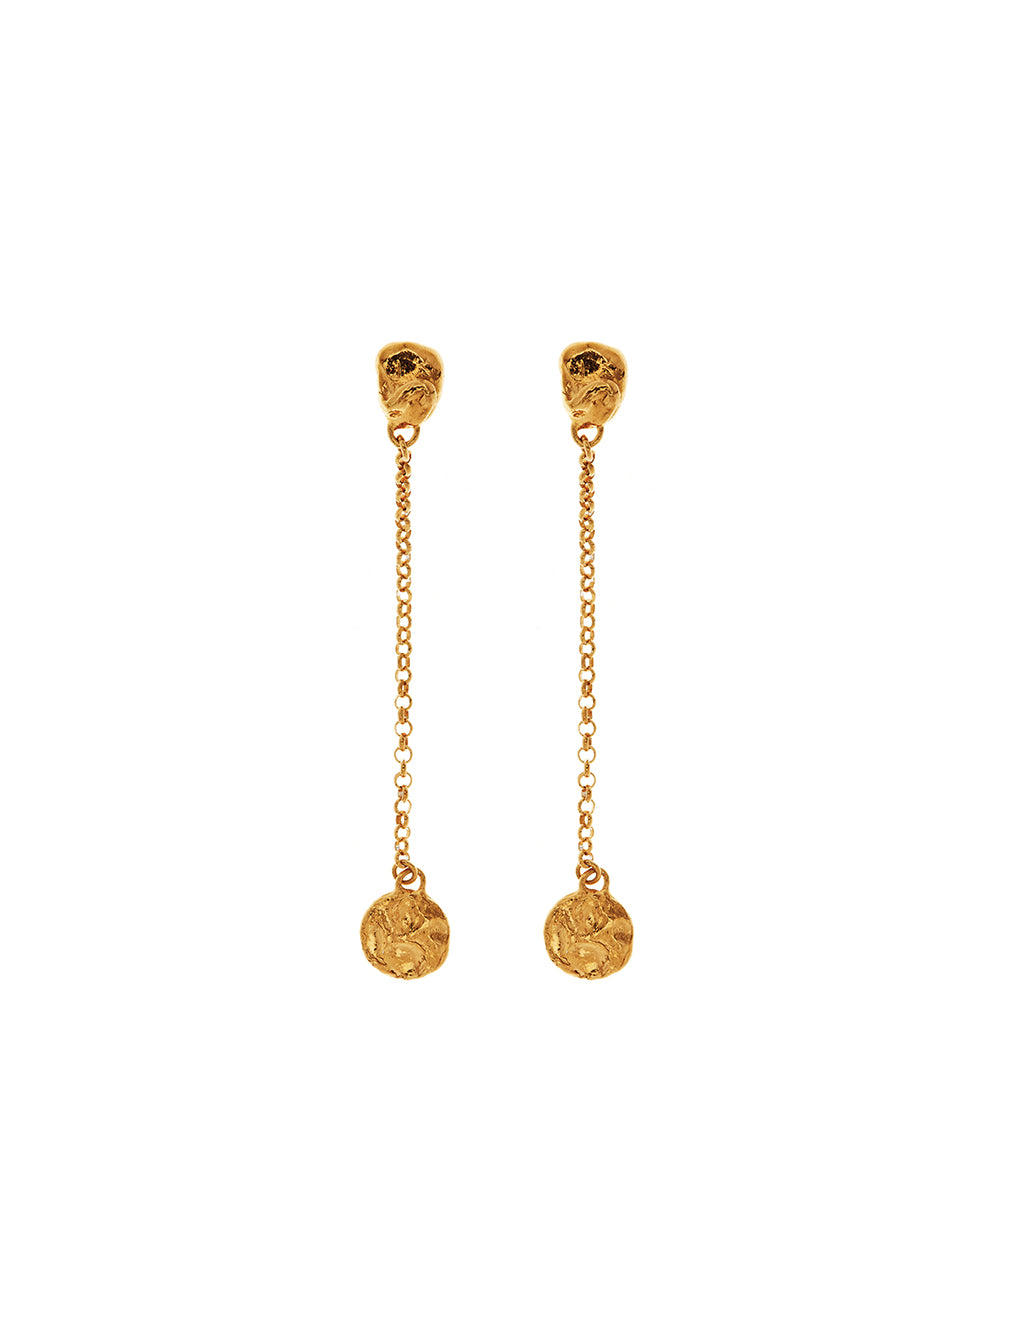 Gold vermeil drop earrings in textured design